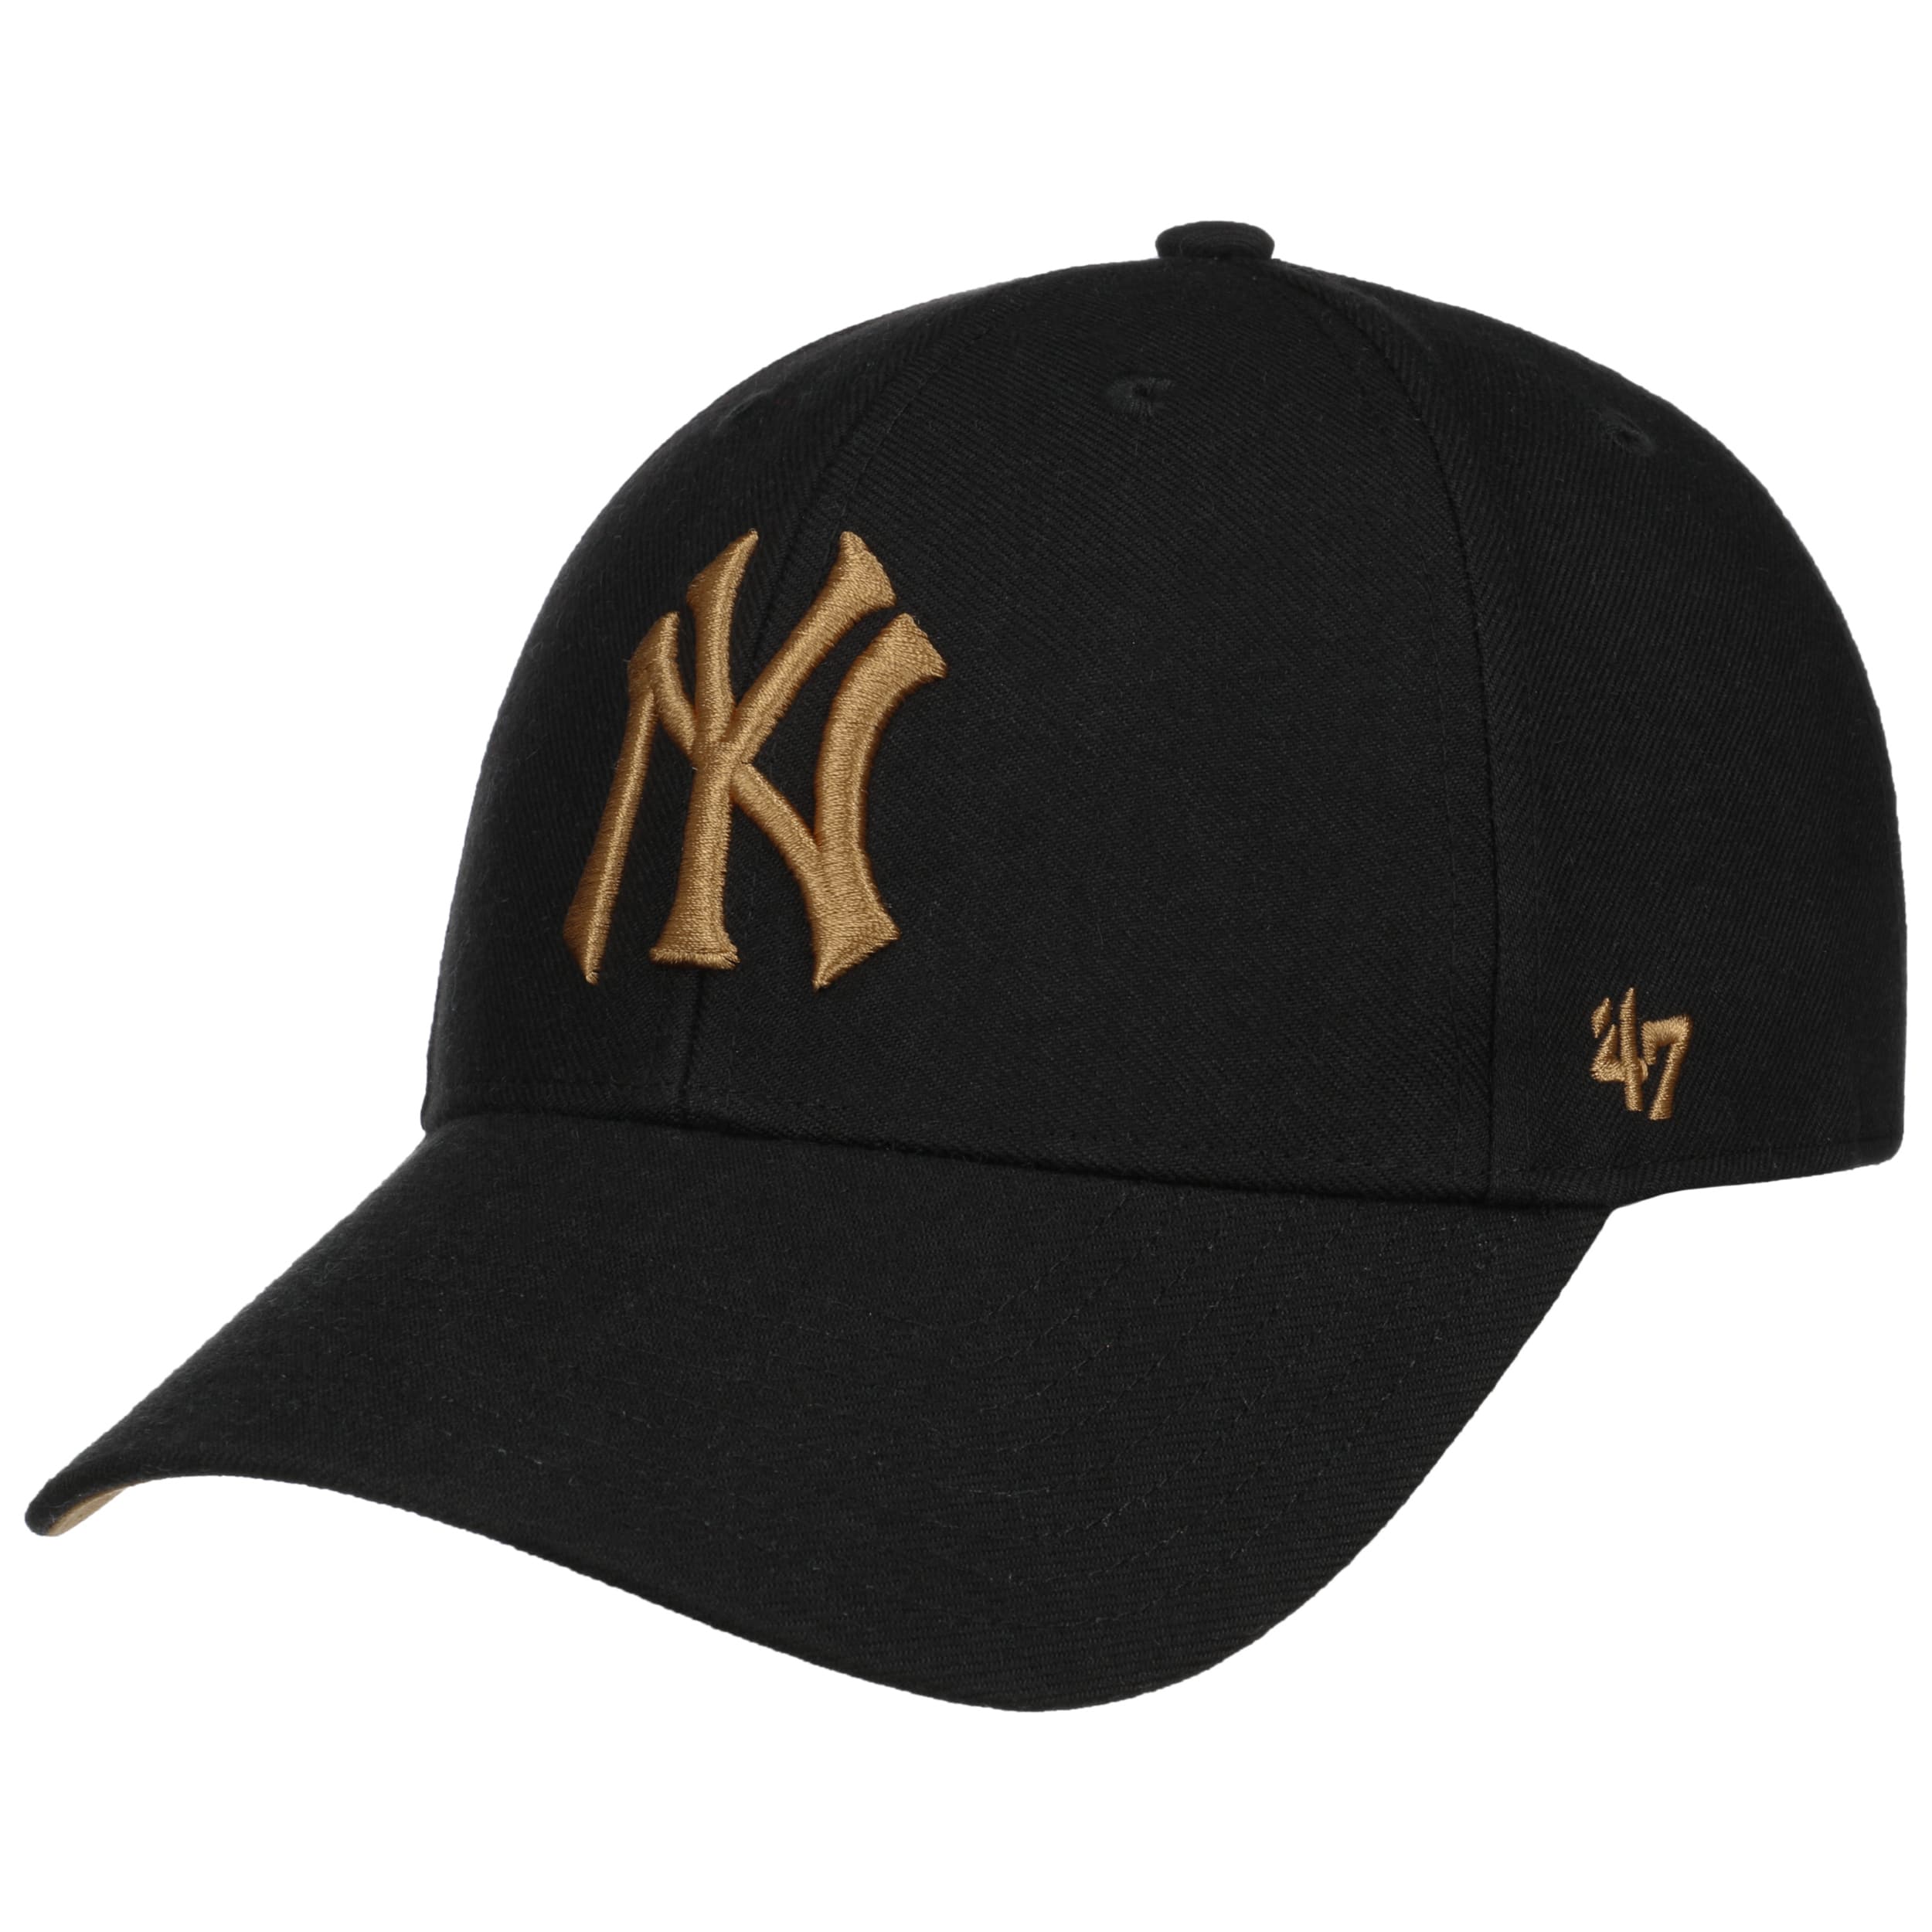 28,95 Yankees by - Ballpark Cap Brand € NY Snap 47 MLB